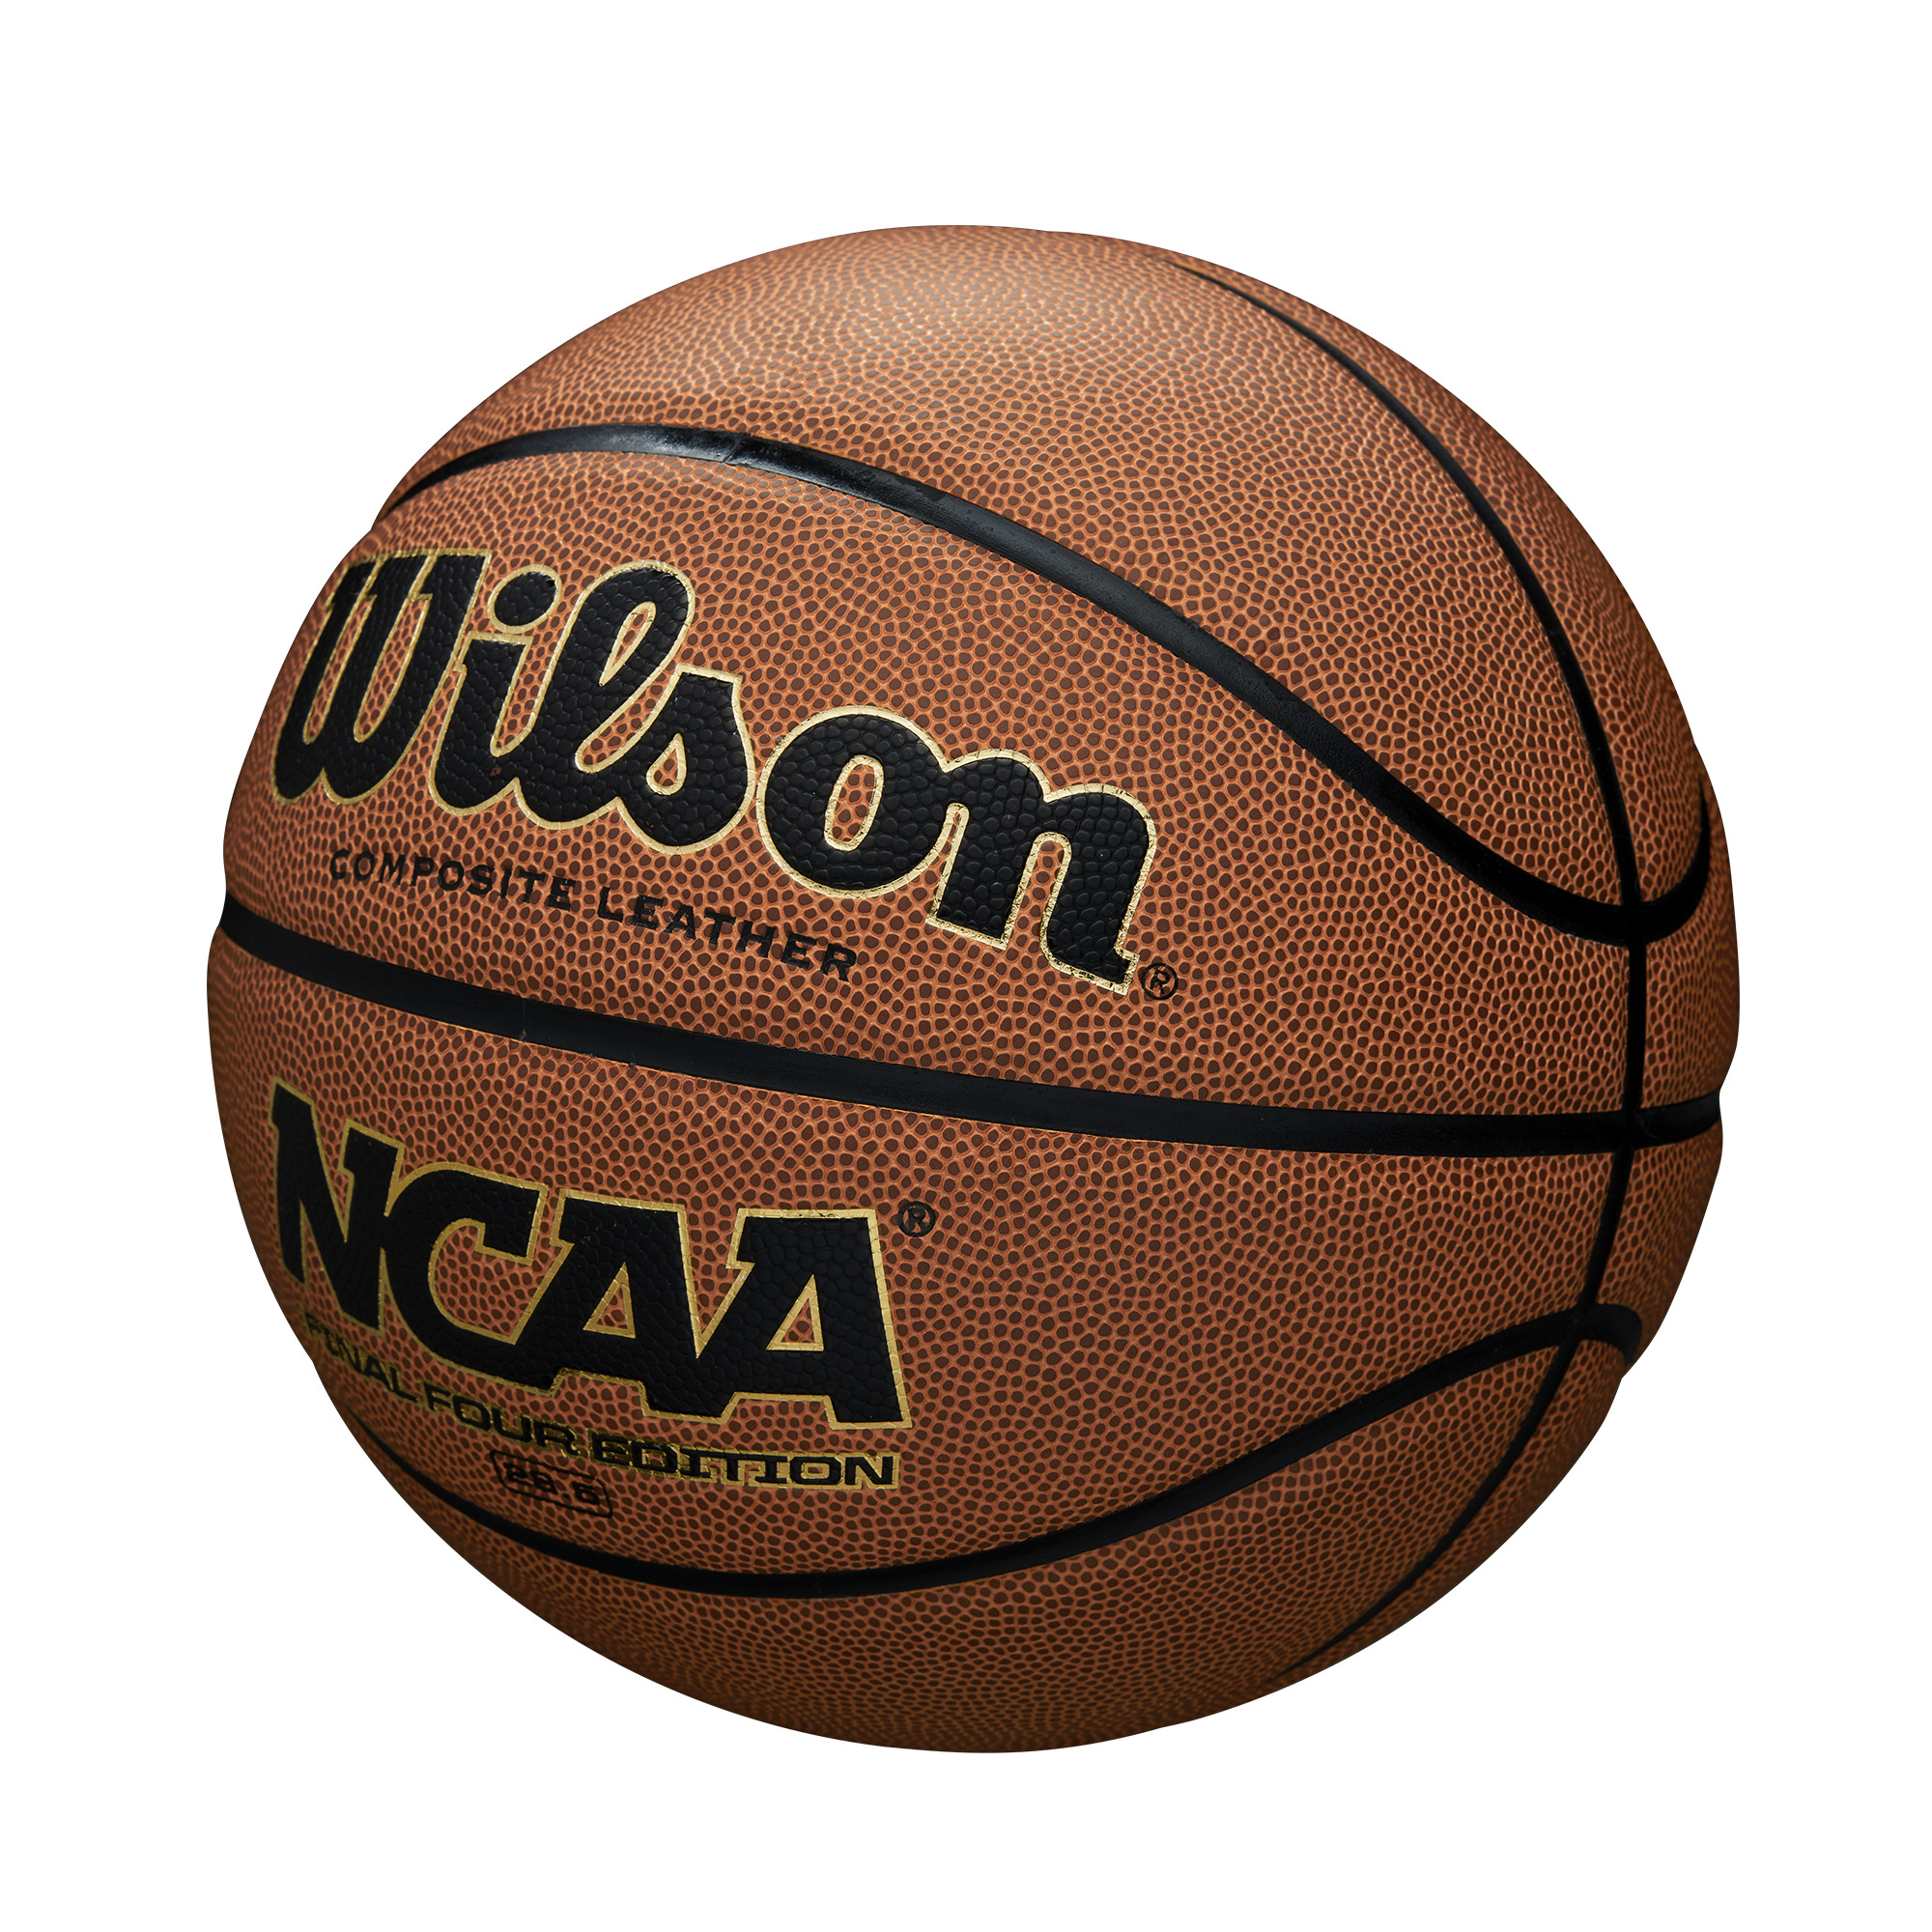 Wilson NCAA Final Four Edition Basketball, Intermediate Size - 28.5" - image 2 of 6